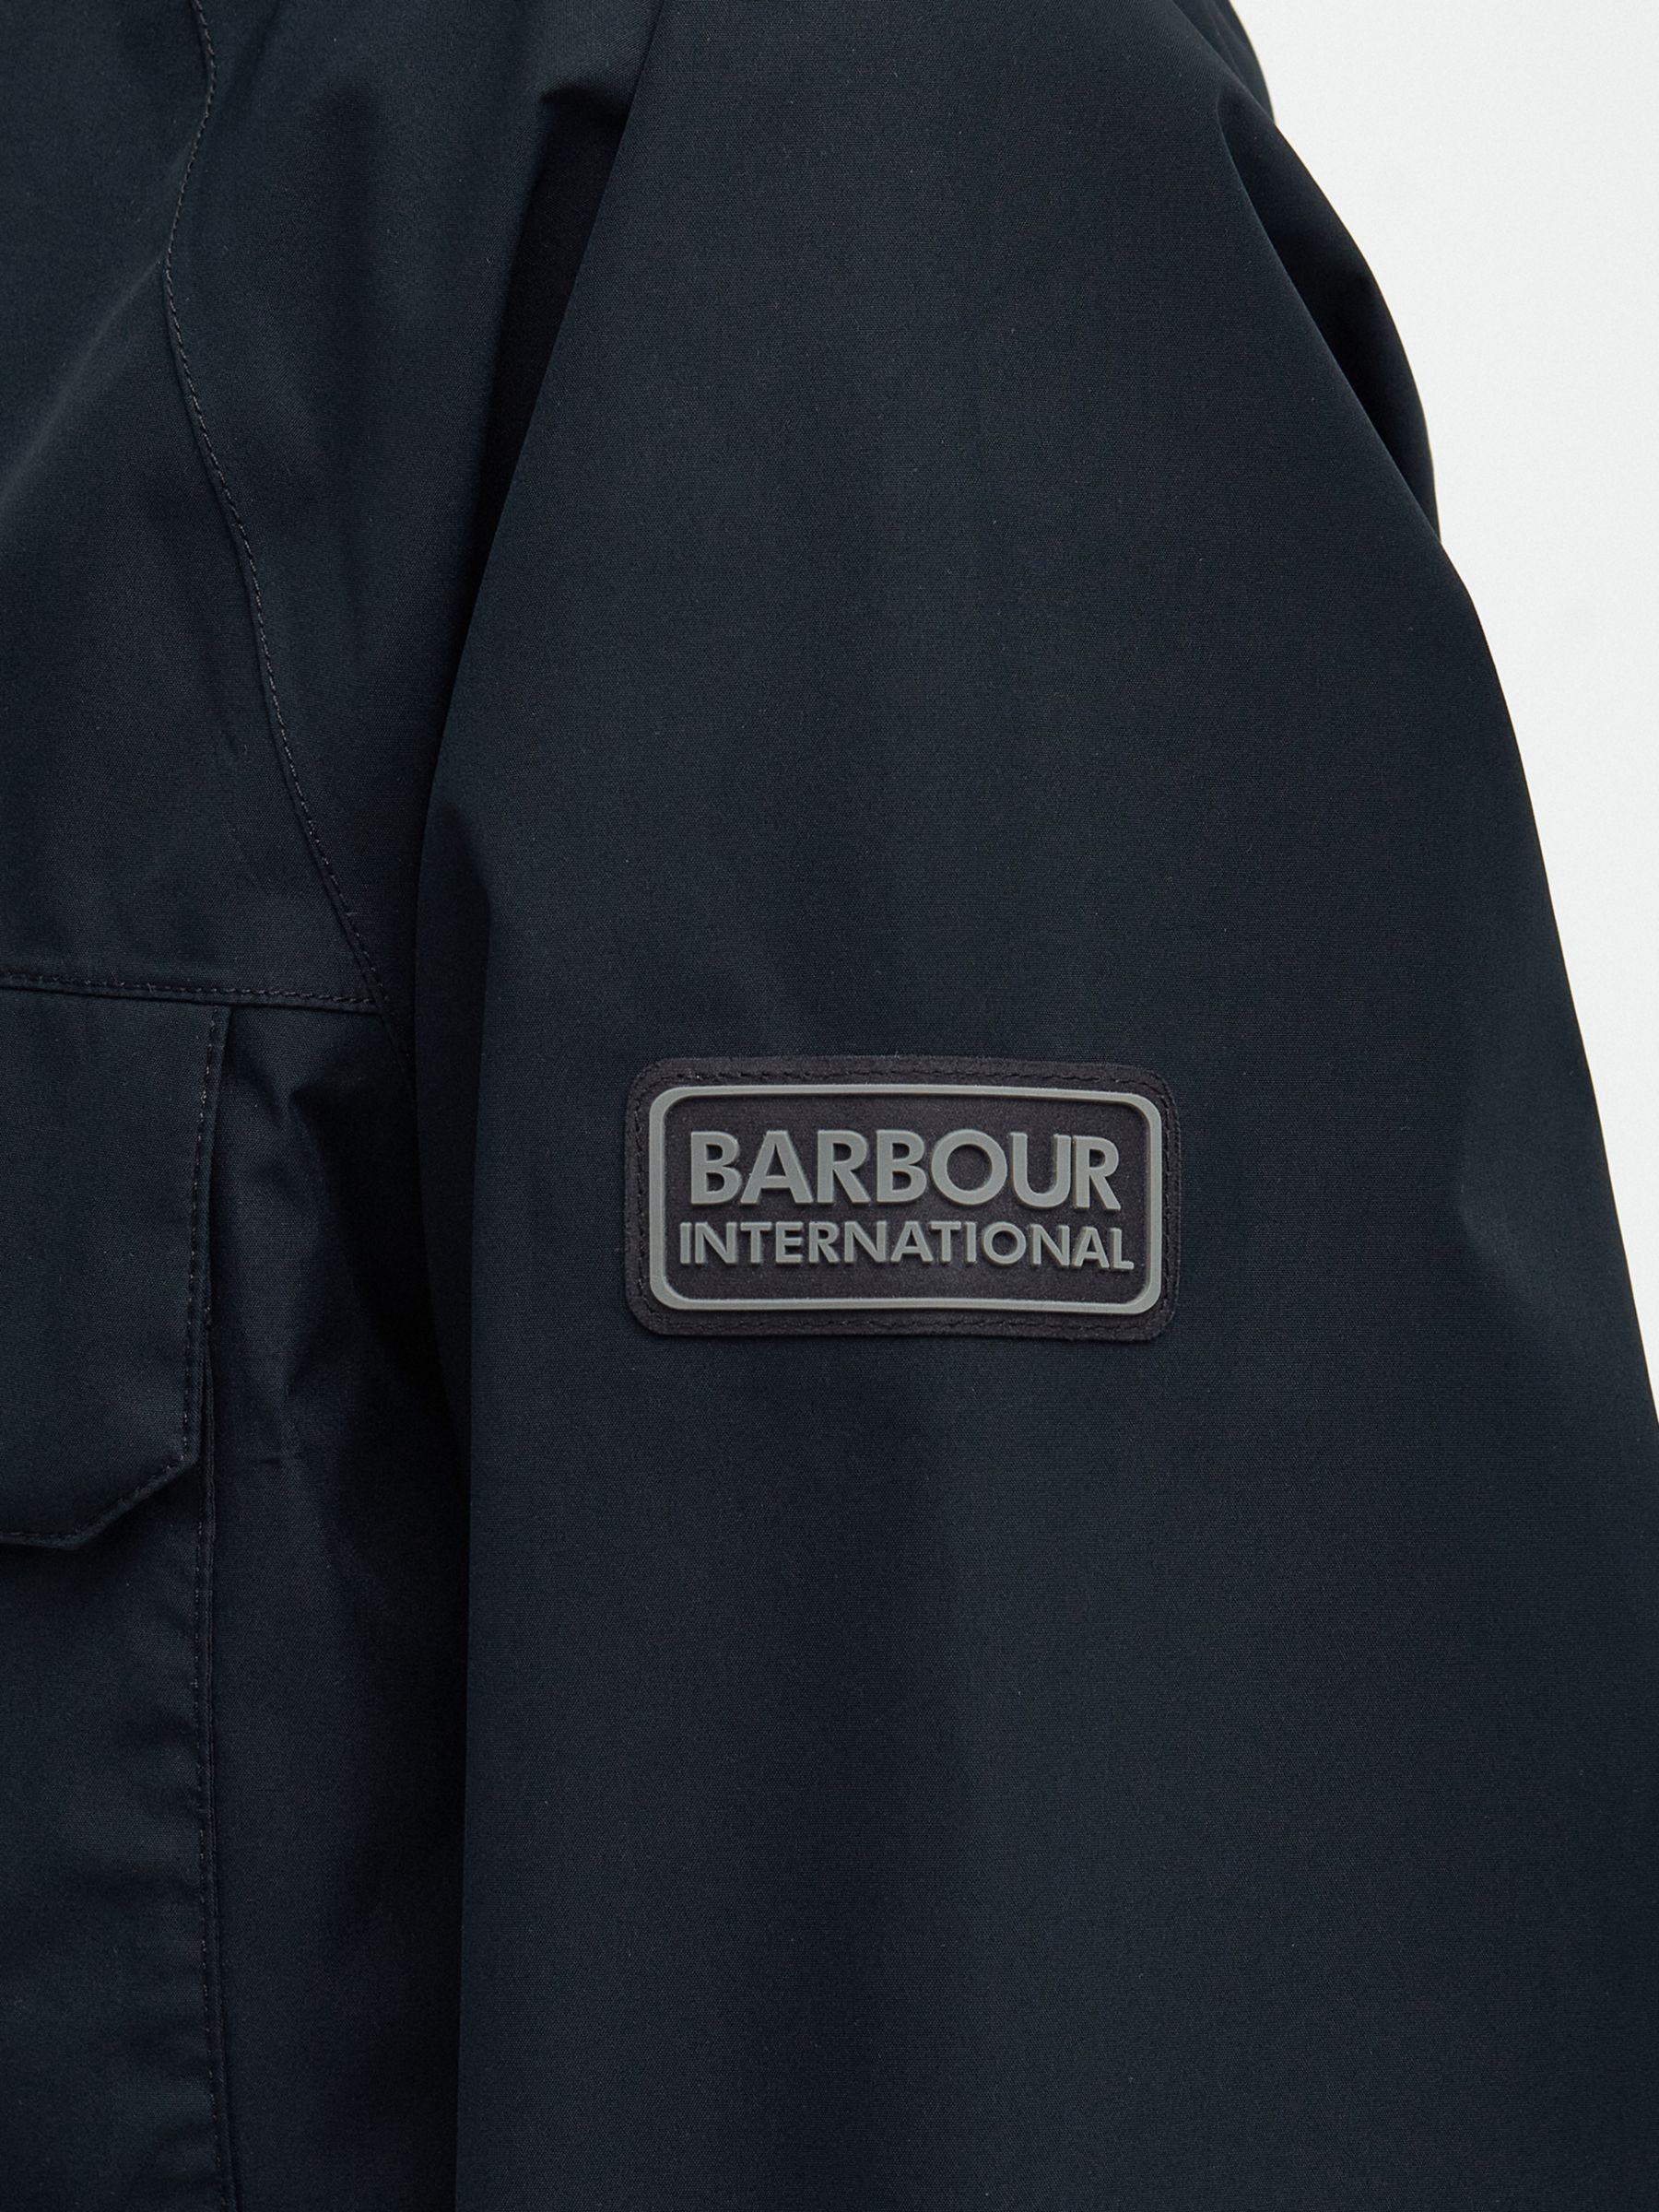 Barbour International Callerton Waterproof Jacket, Black, S